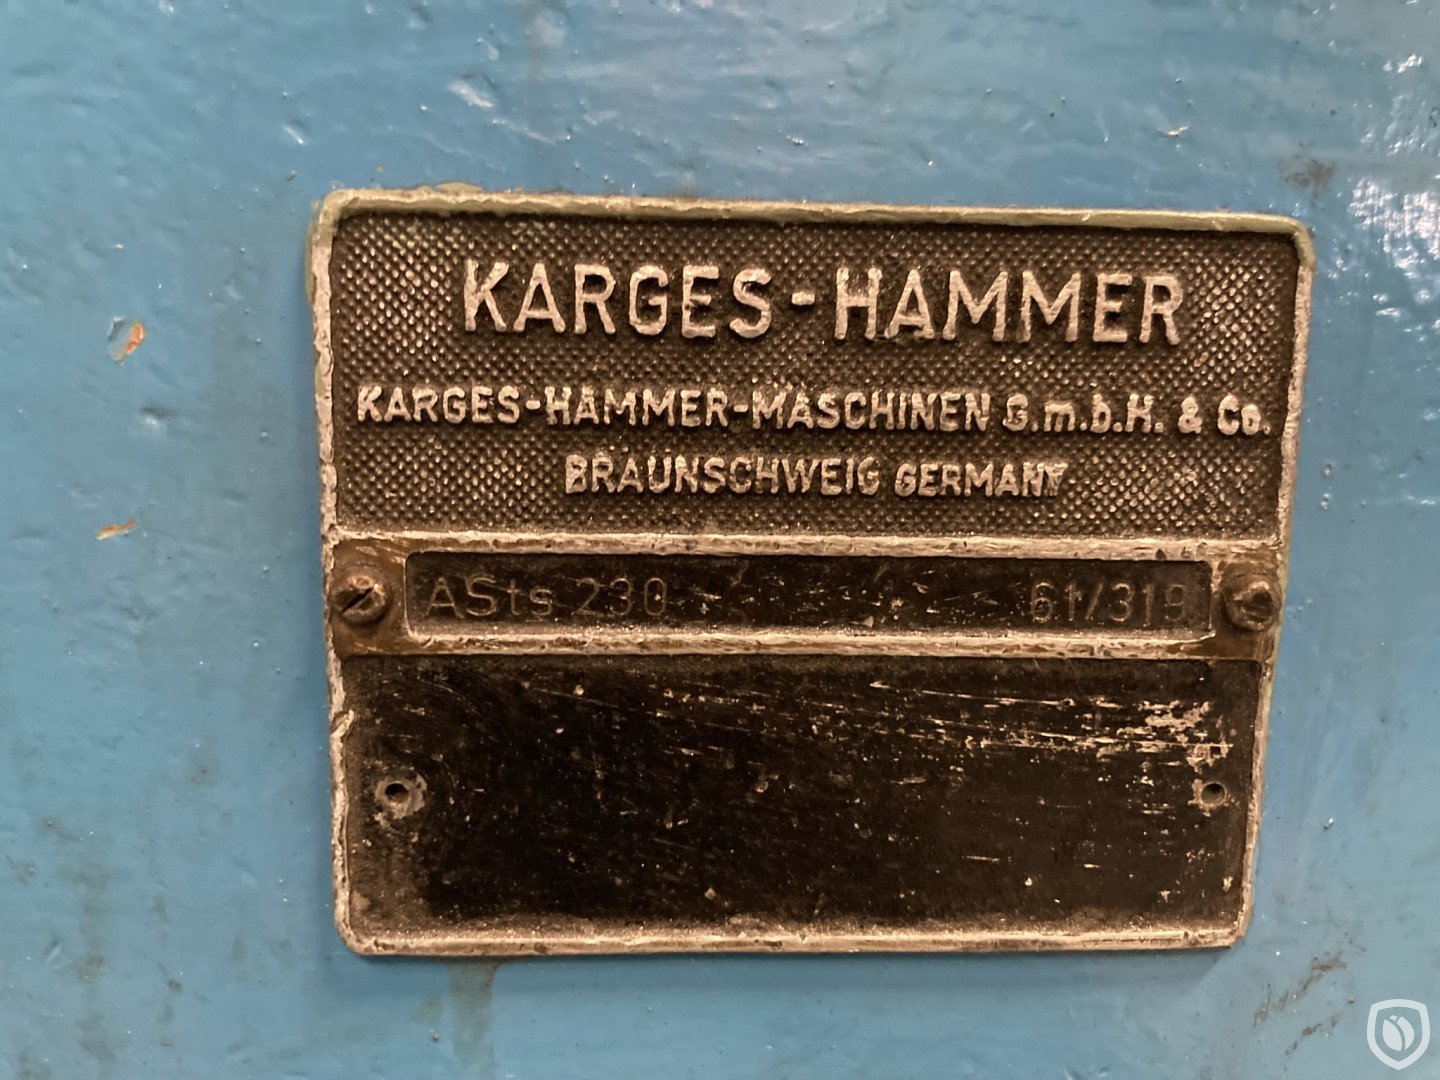 Karges Hammer ASts 230